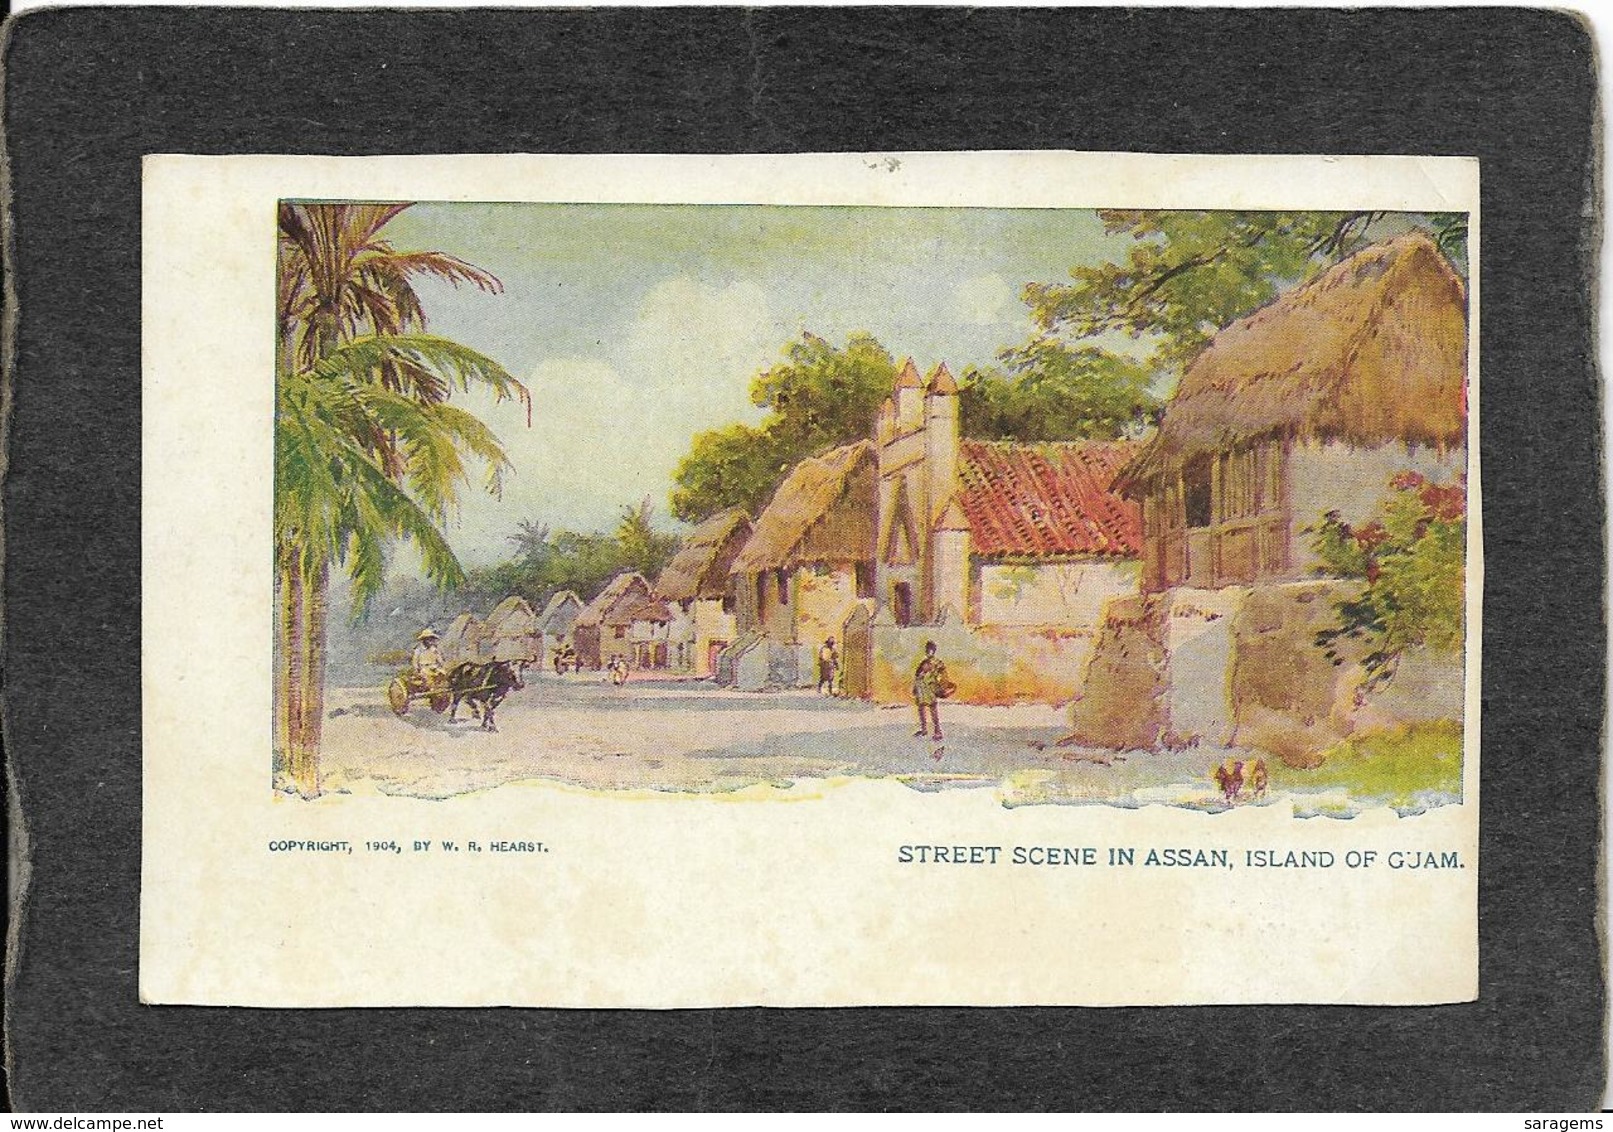 Guam-Street Scene In Assan,Guam 1904 - Mint Antique Postcard - Guam